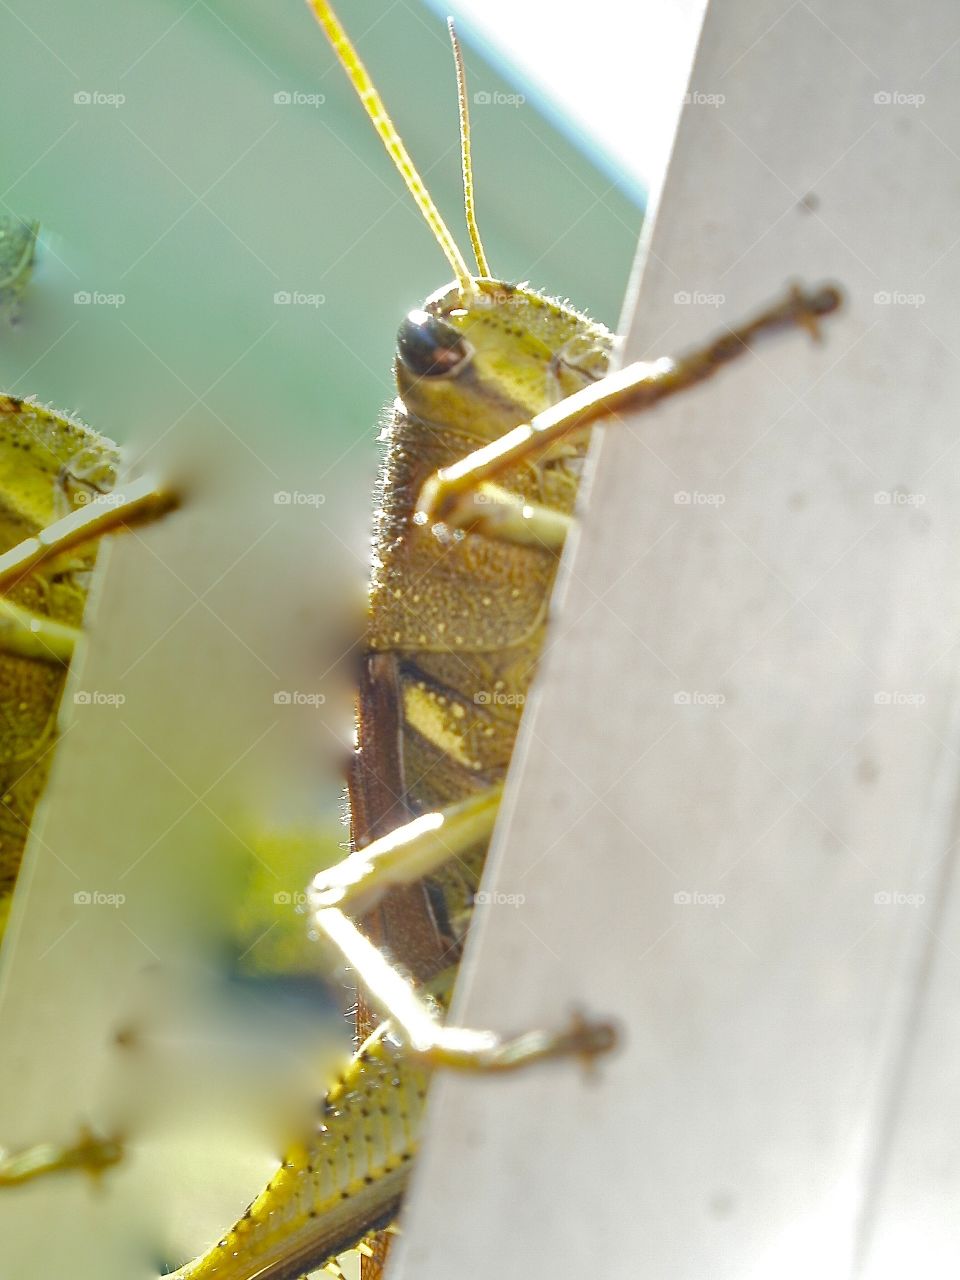 Grasshopper peeking around a post, FL